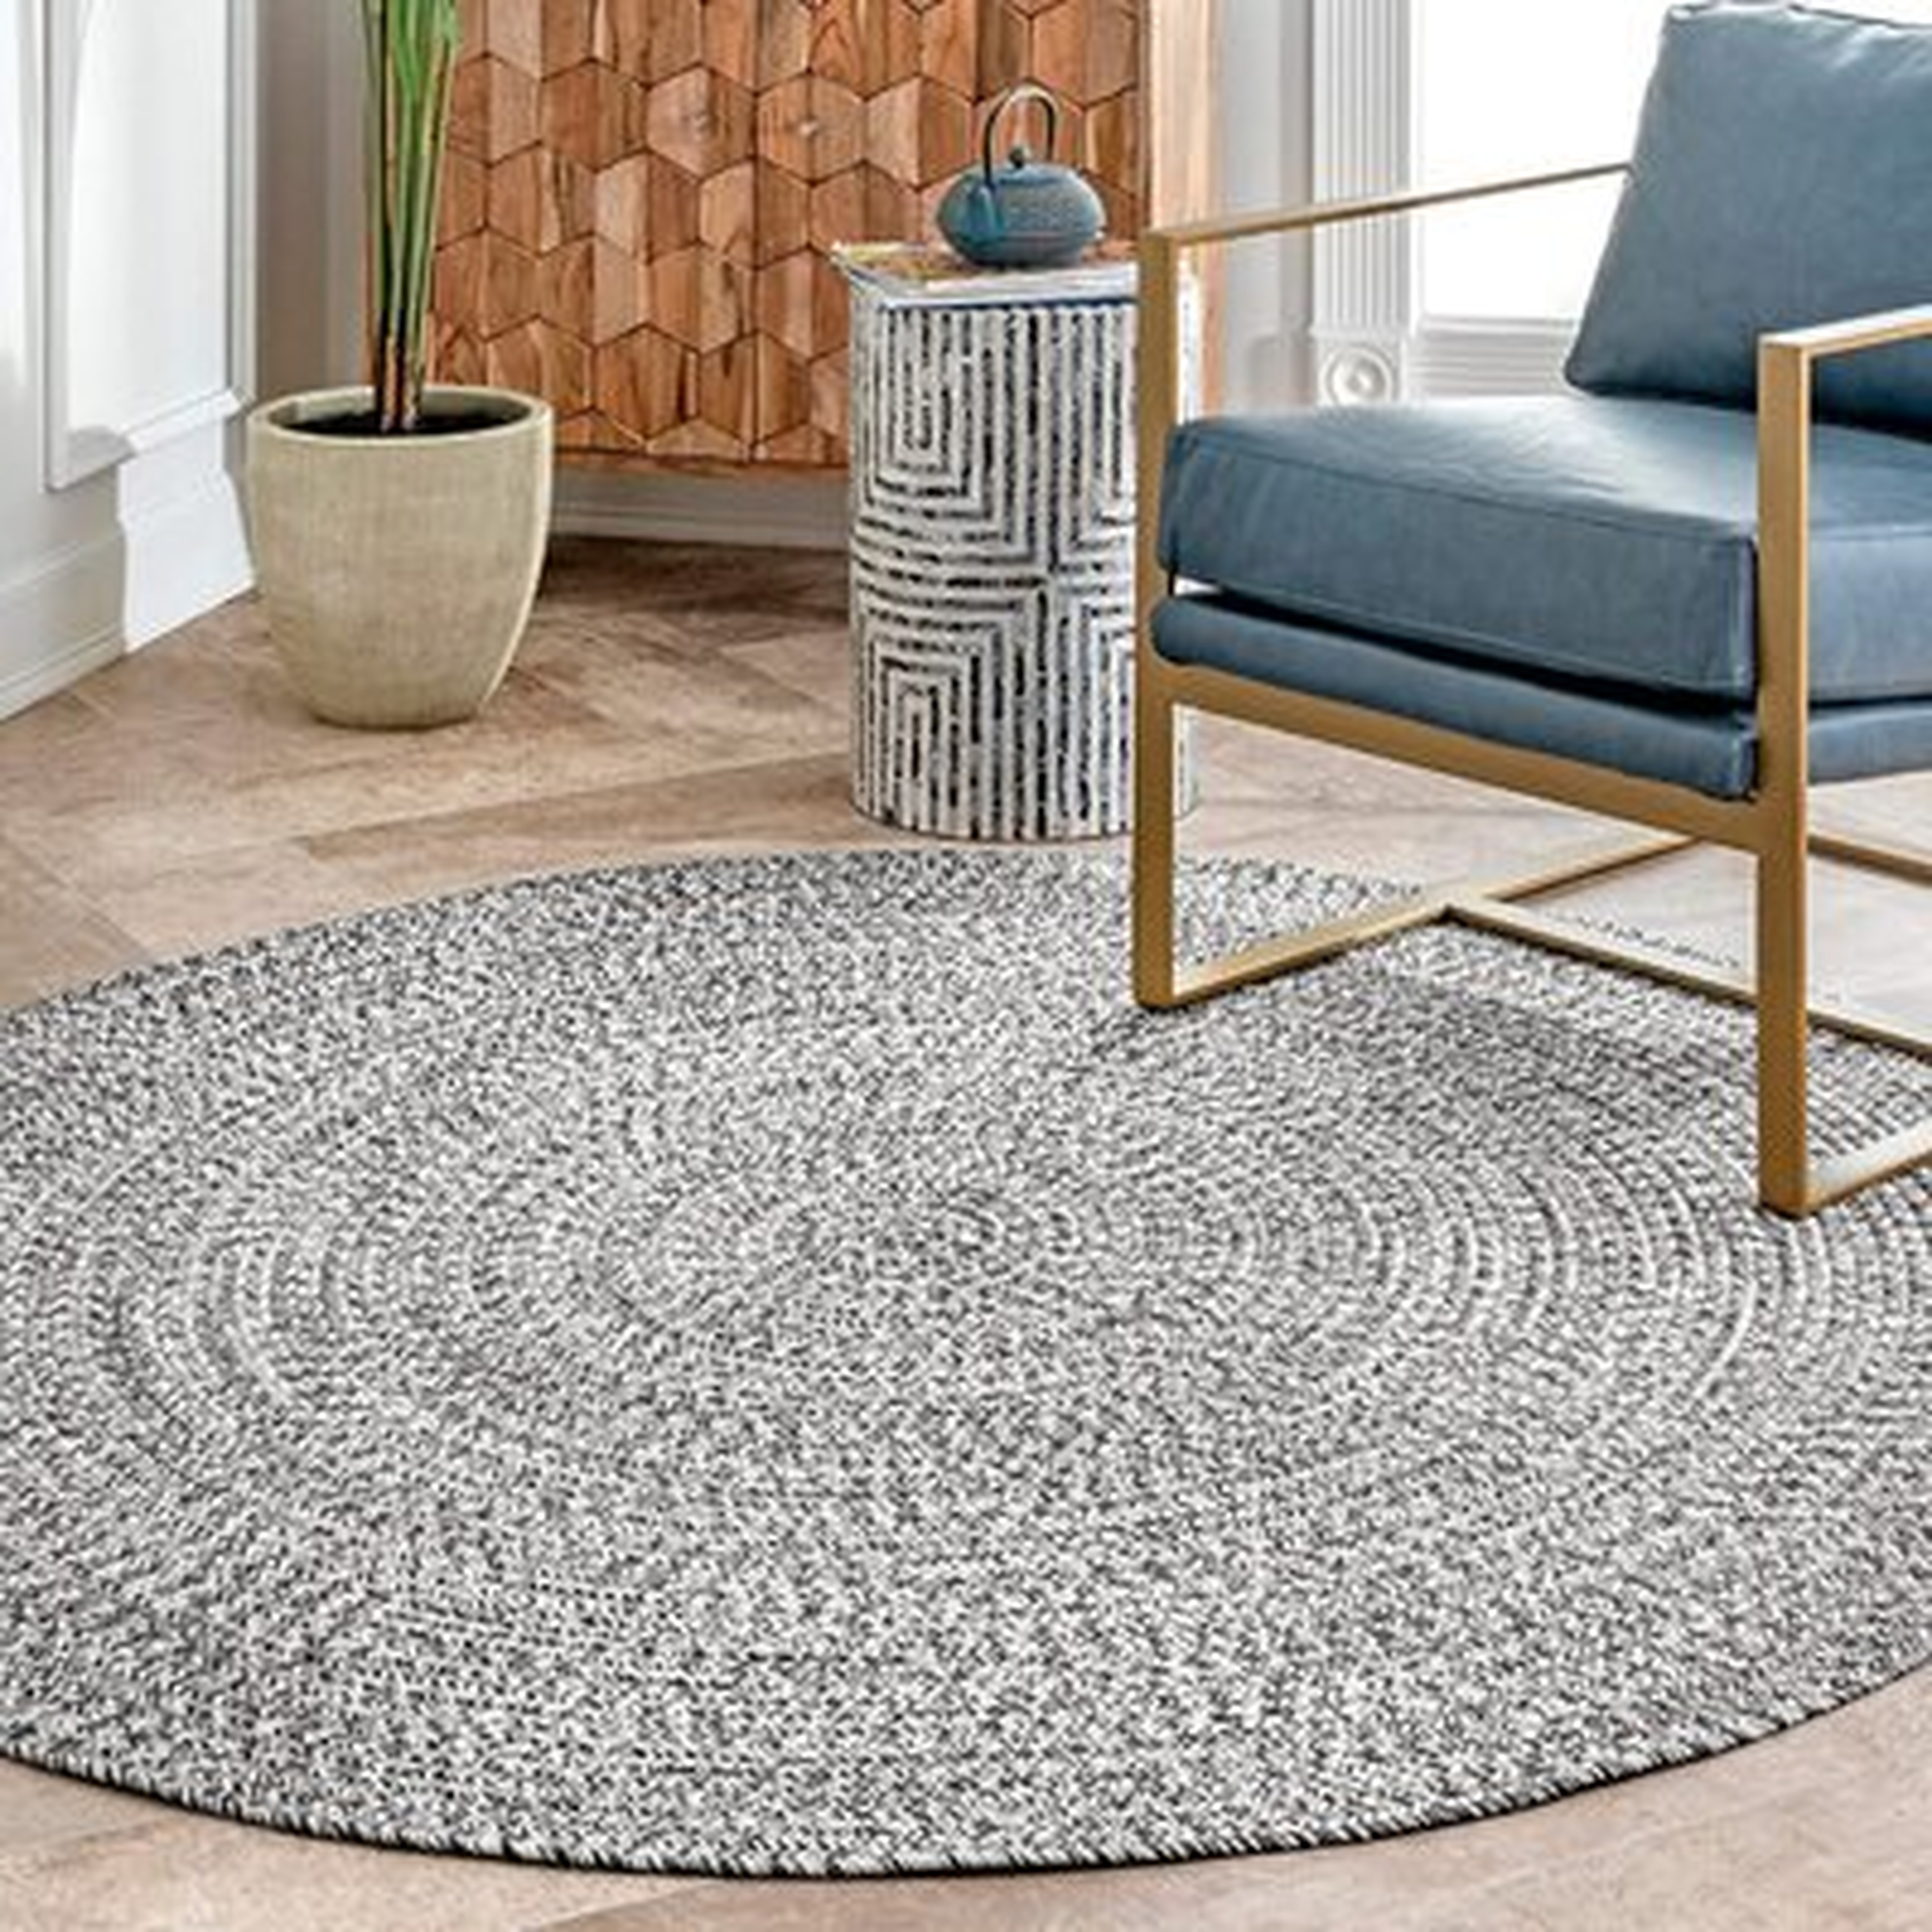 Braided Indoor/Outdoor Circular Carpet - Wayfair